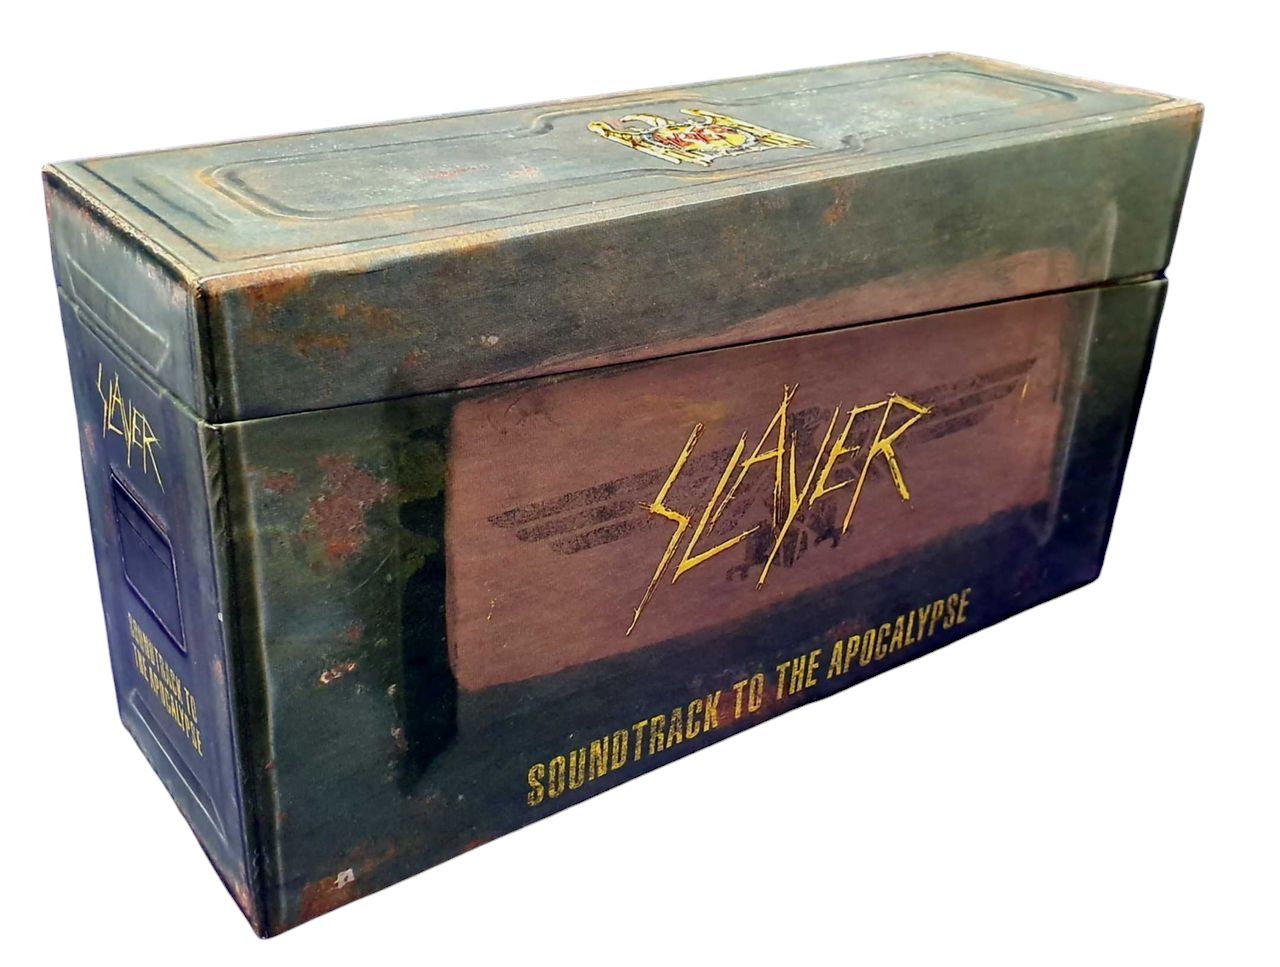 Slayer Soundtrack To The Apocalypse US Cd album box set 